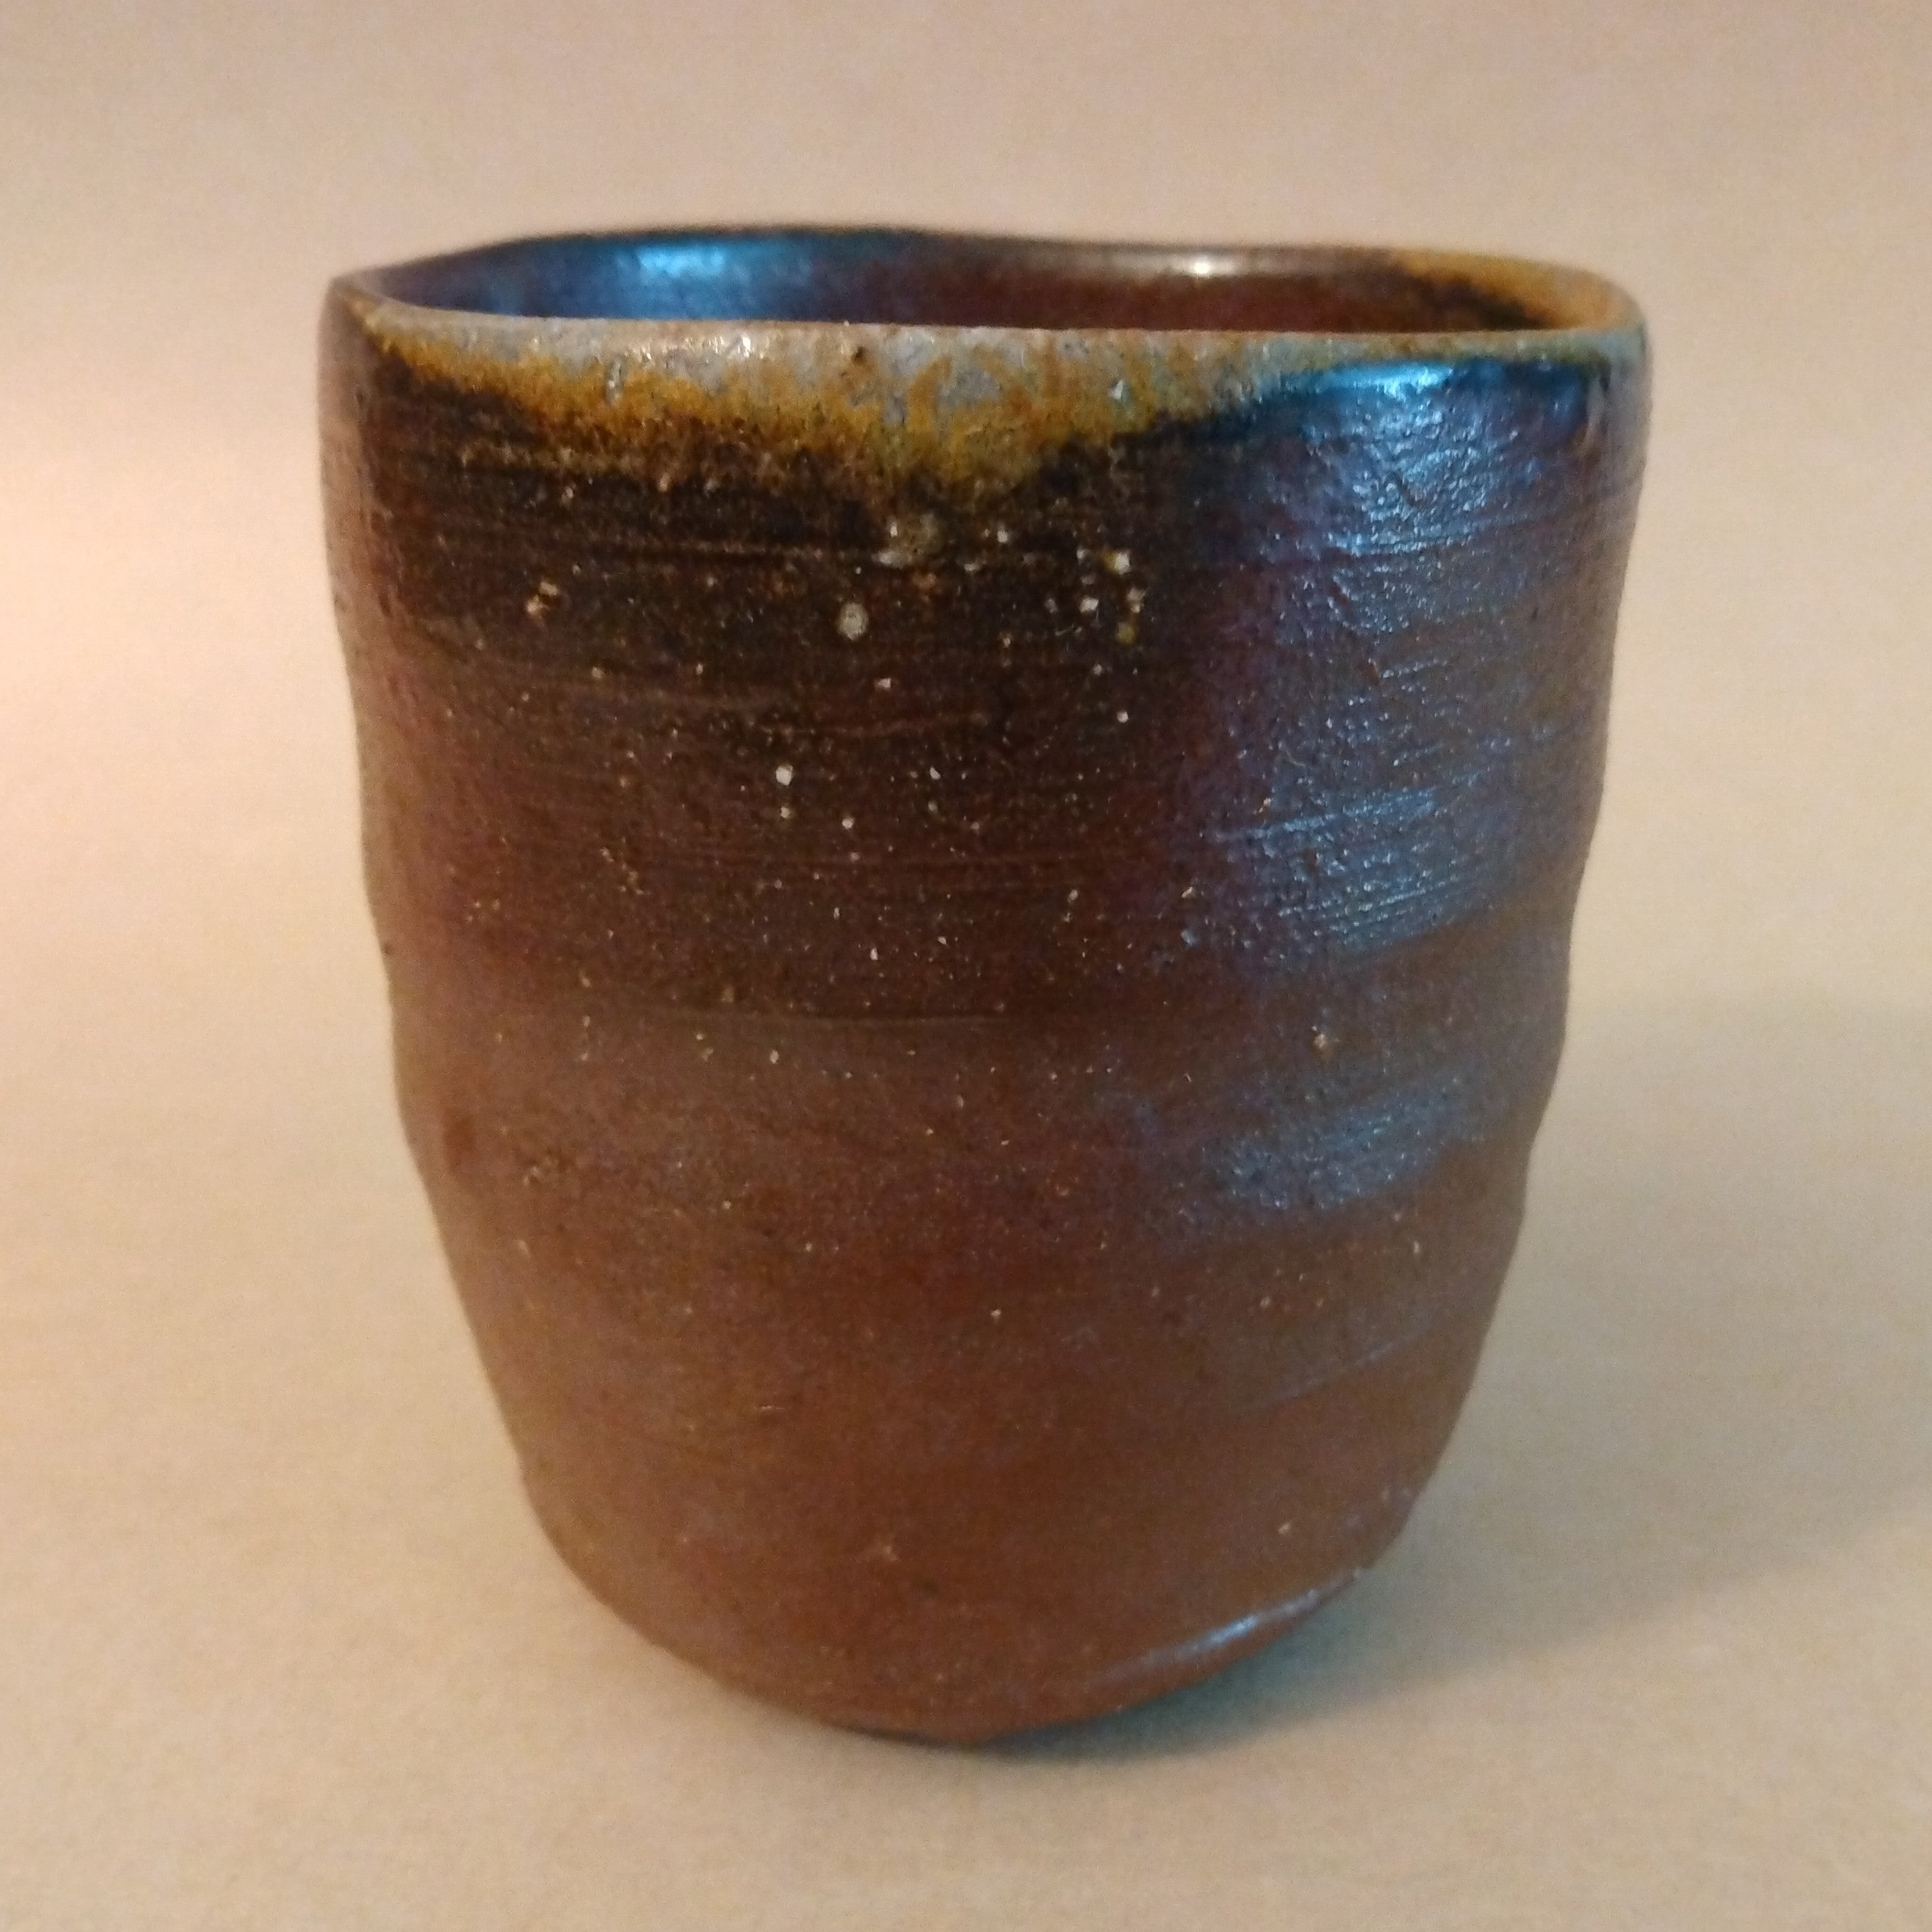 Bizen-yaki Yunomi (Tea Cup), attributed to Matsui Tomoyuki; Thiel Collection